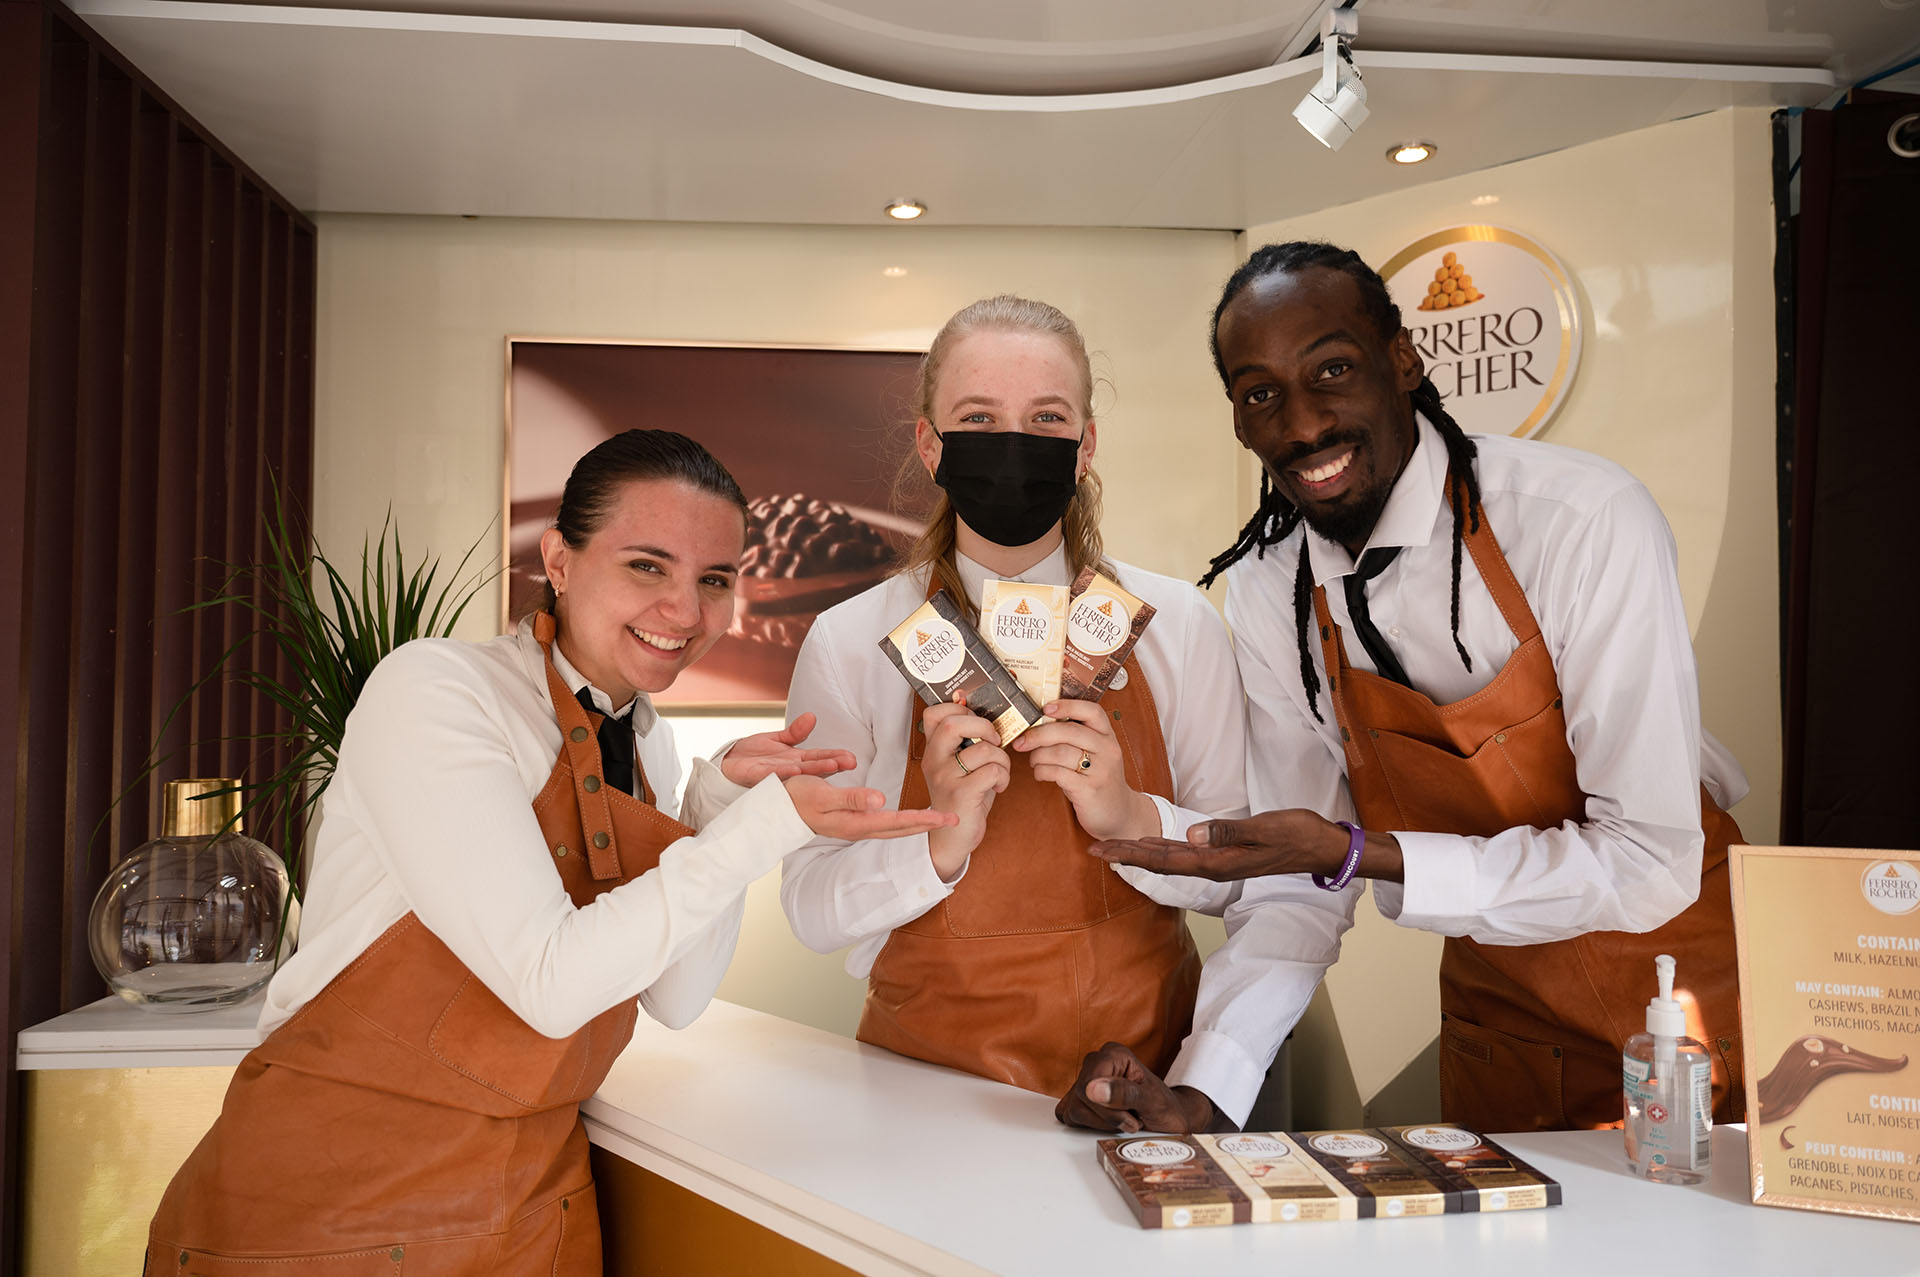 Brand Ambassadors at the Ferrero Rocher activation